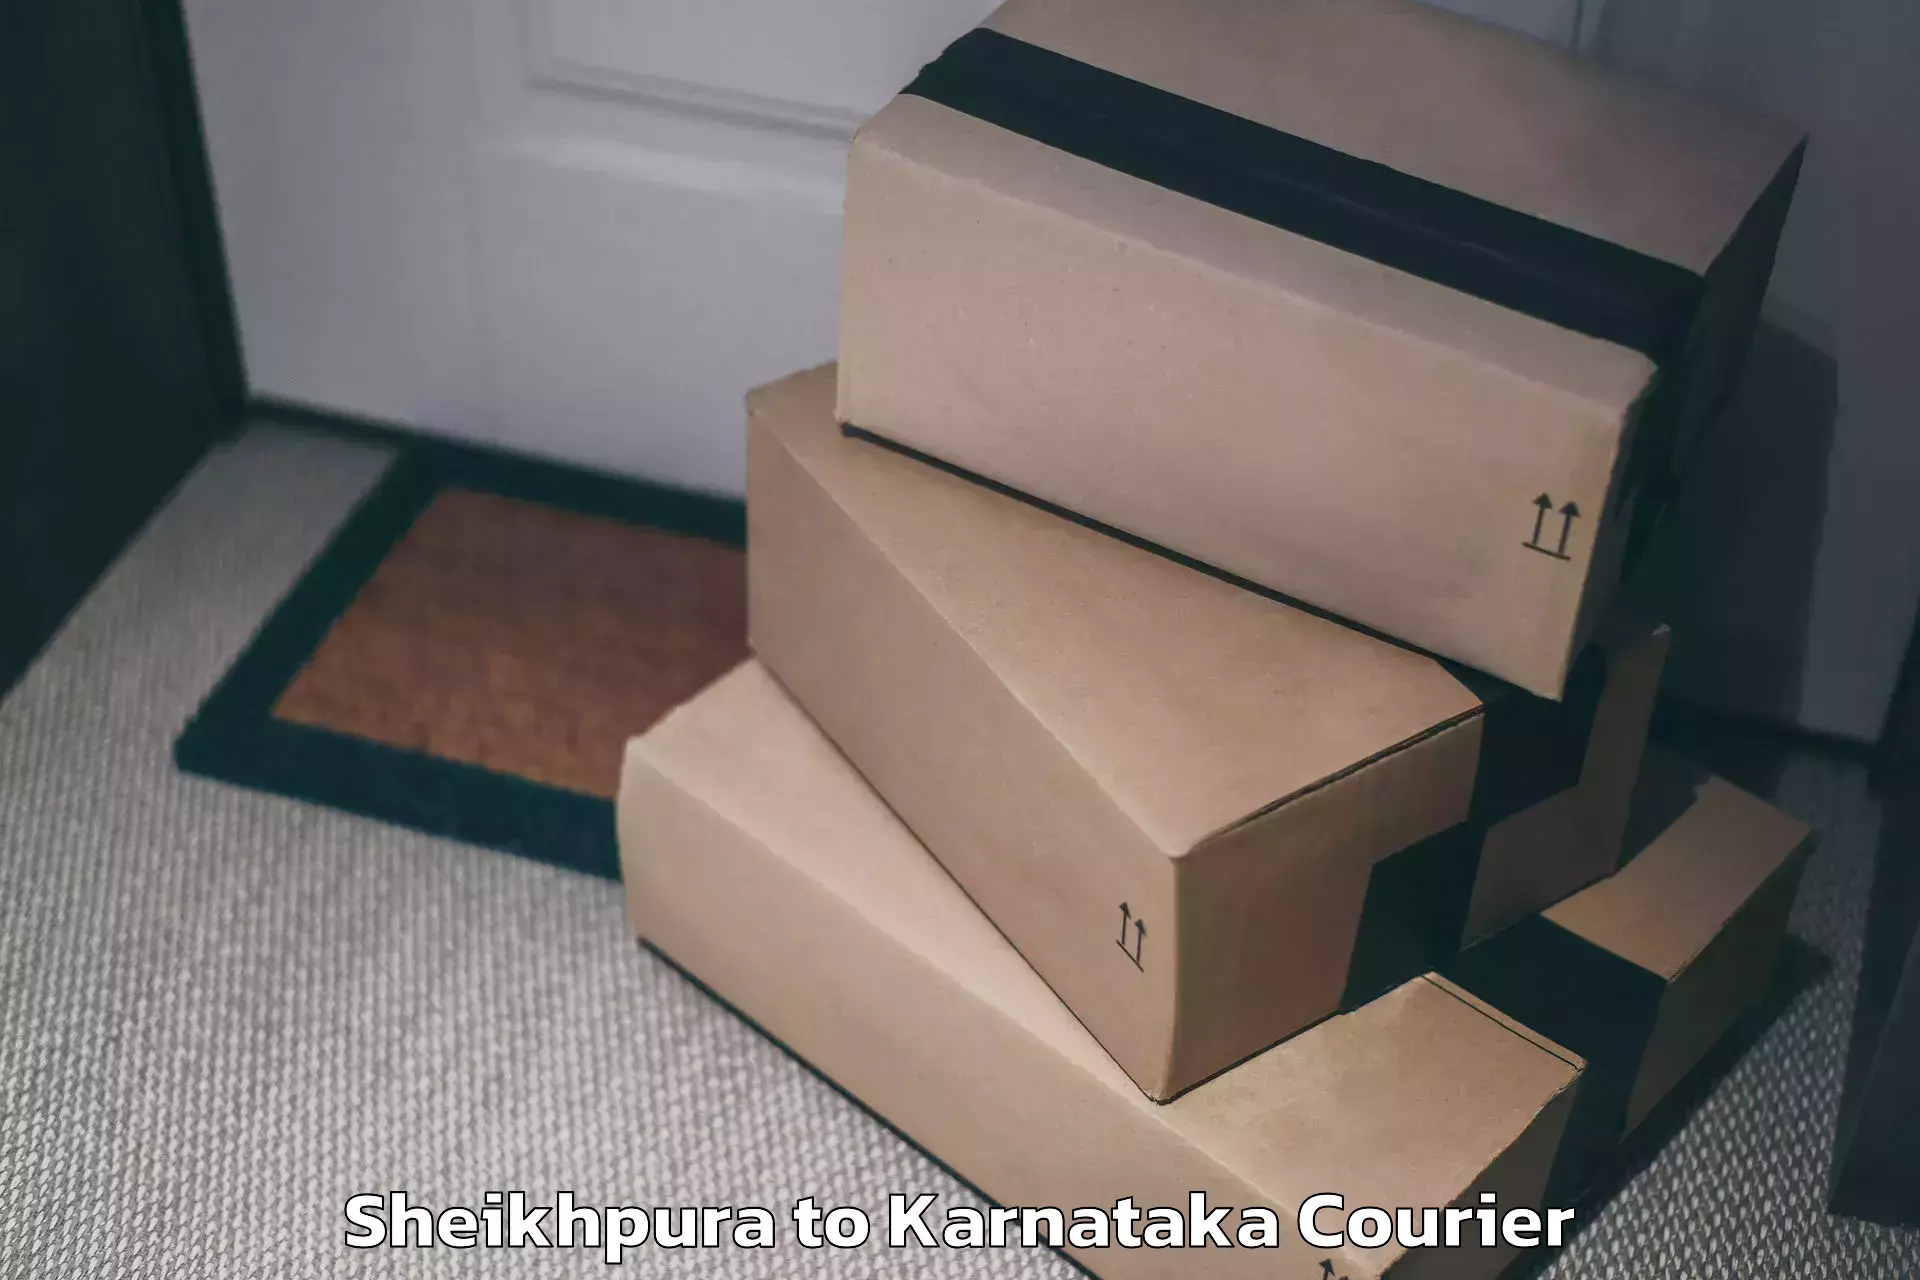 Luggage shipment specialists Sheikhpura to Karnataka